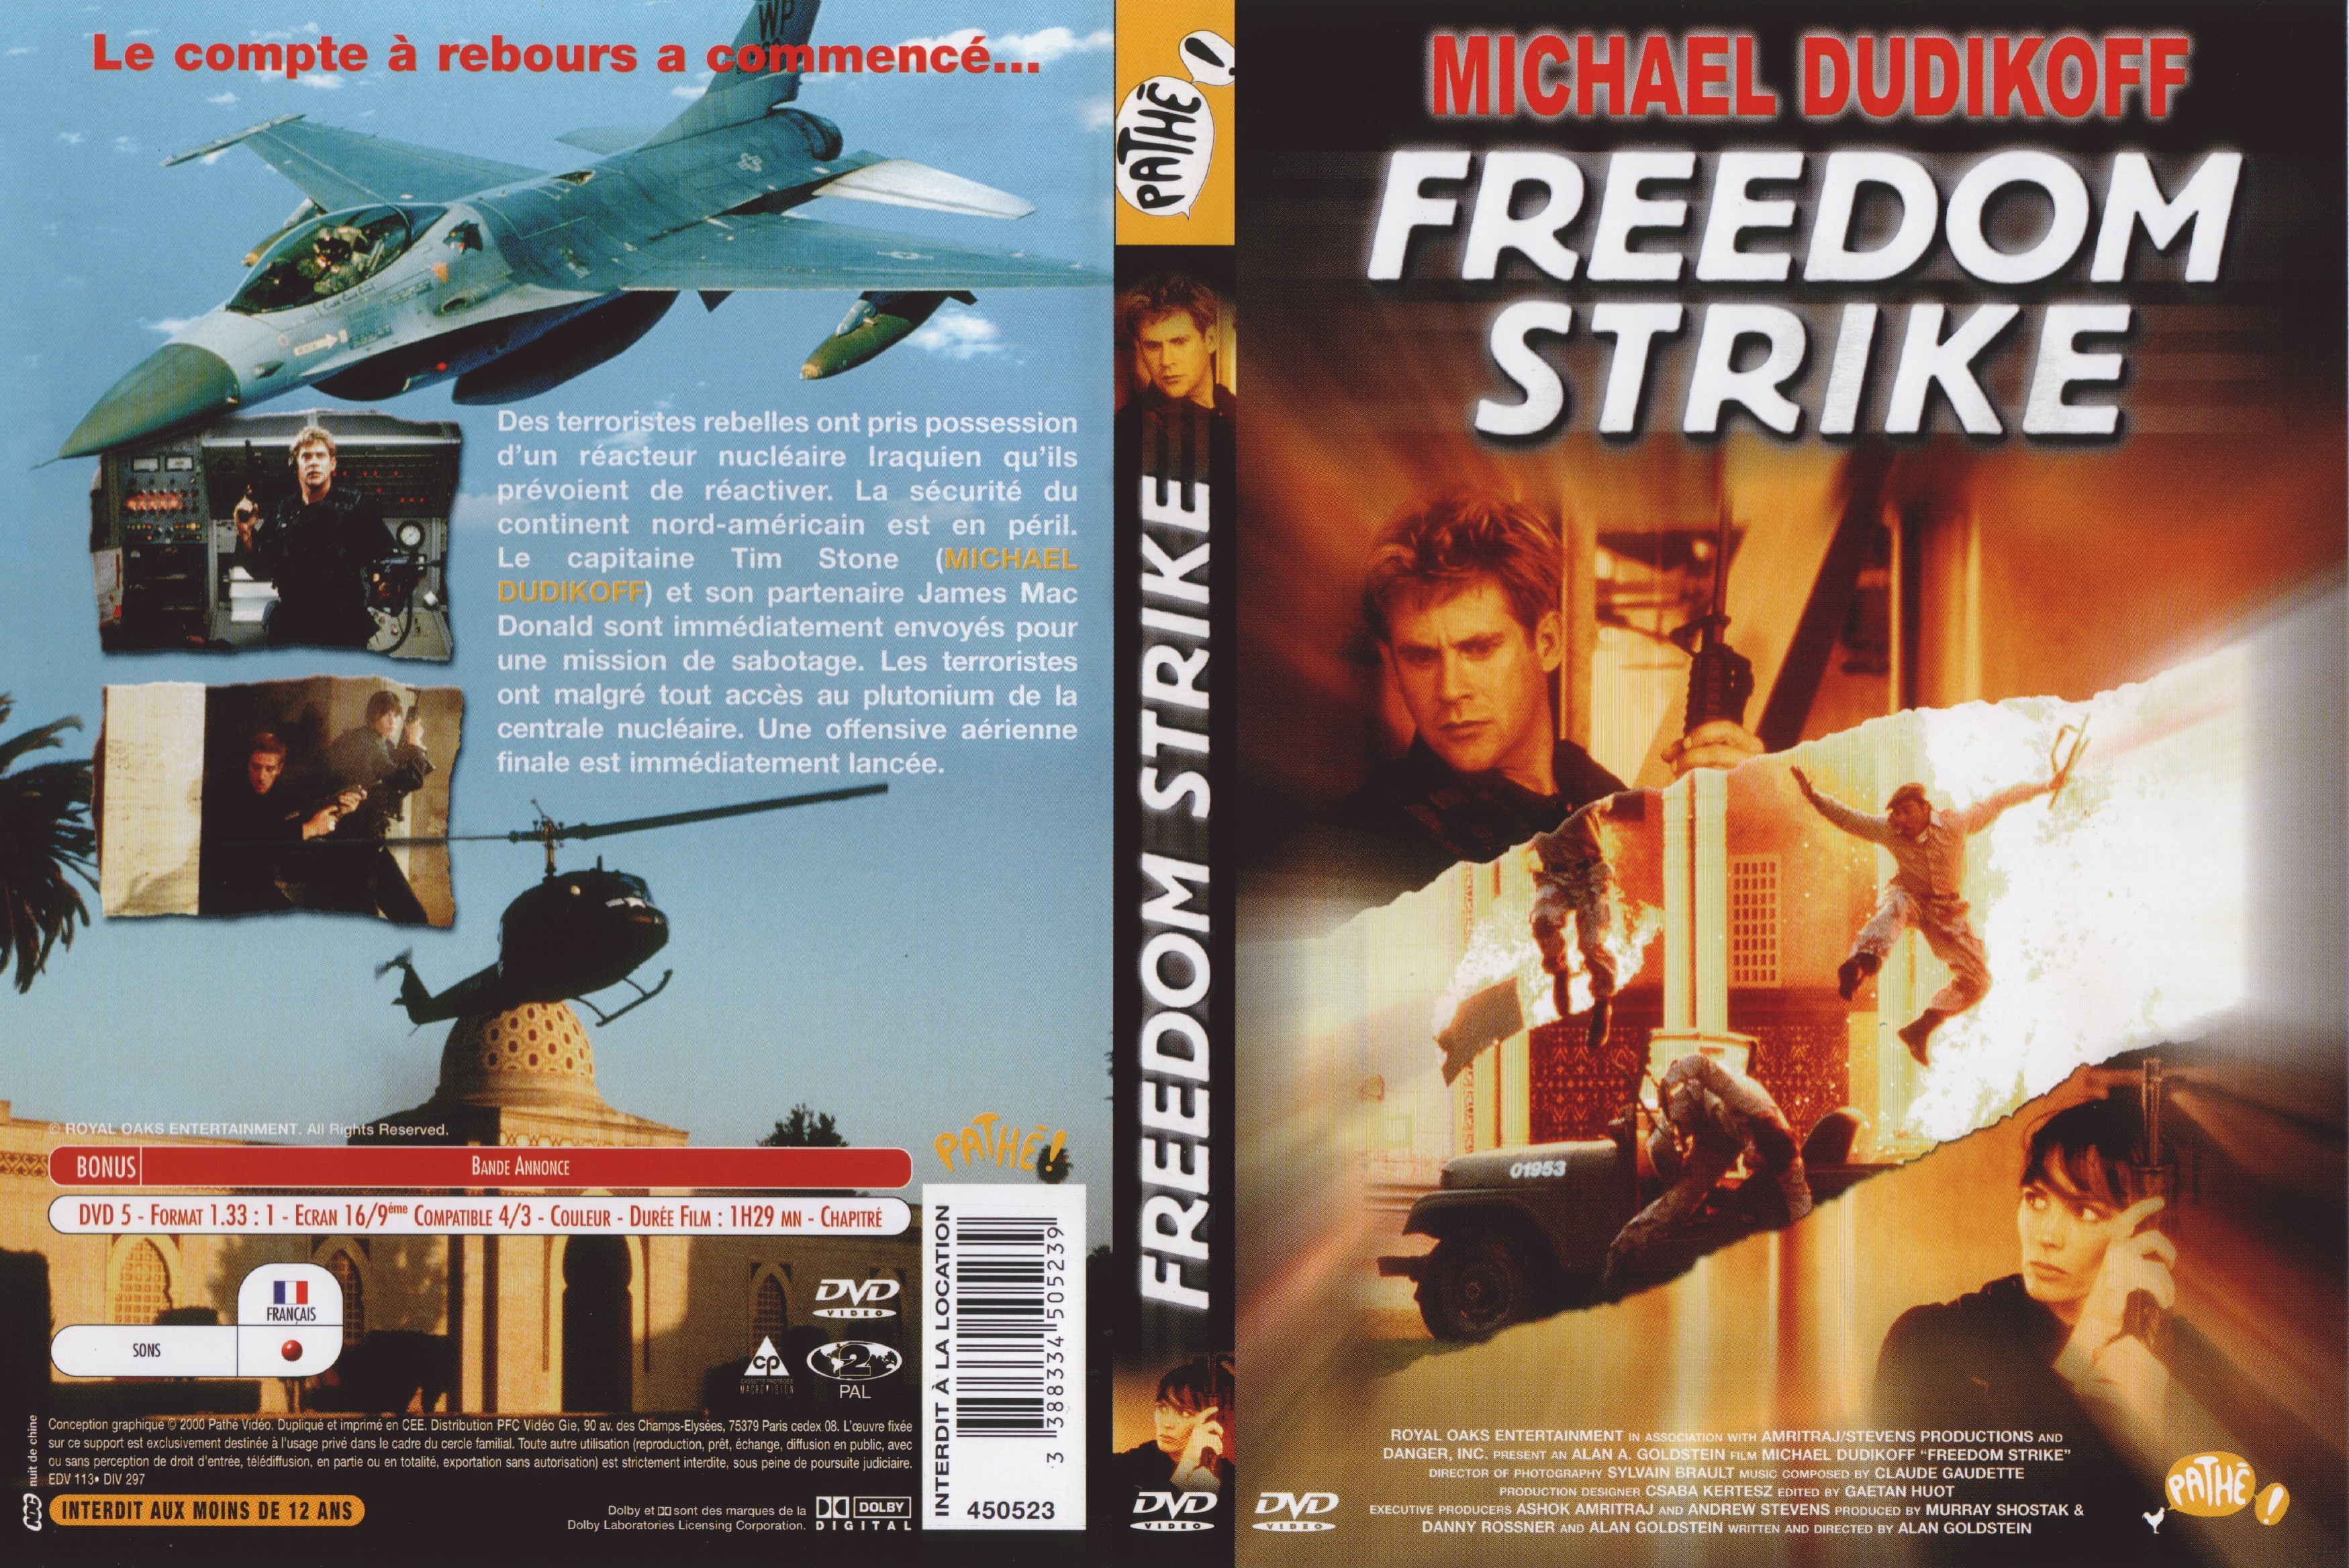 Jaquette DVD Freedom strike